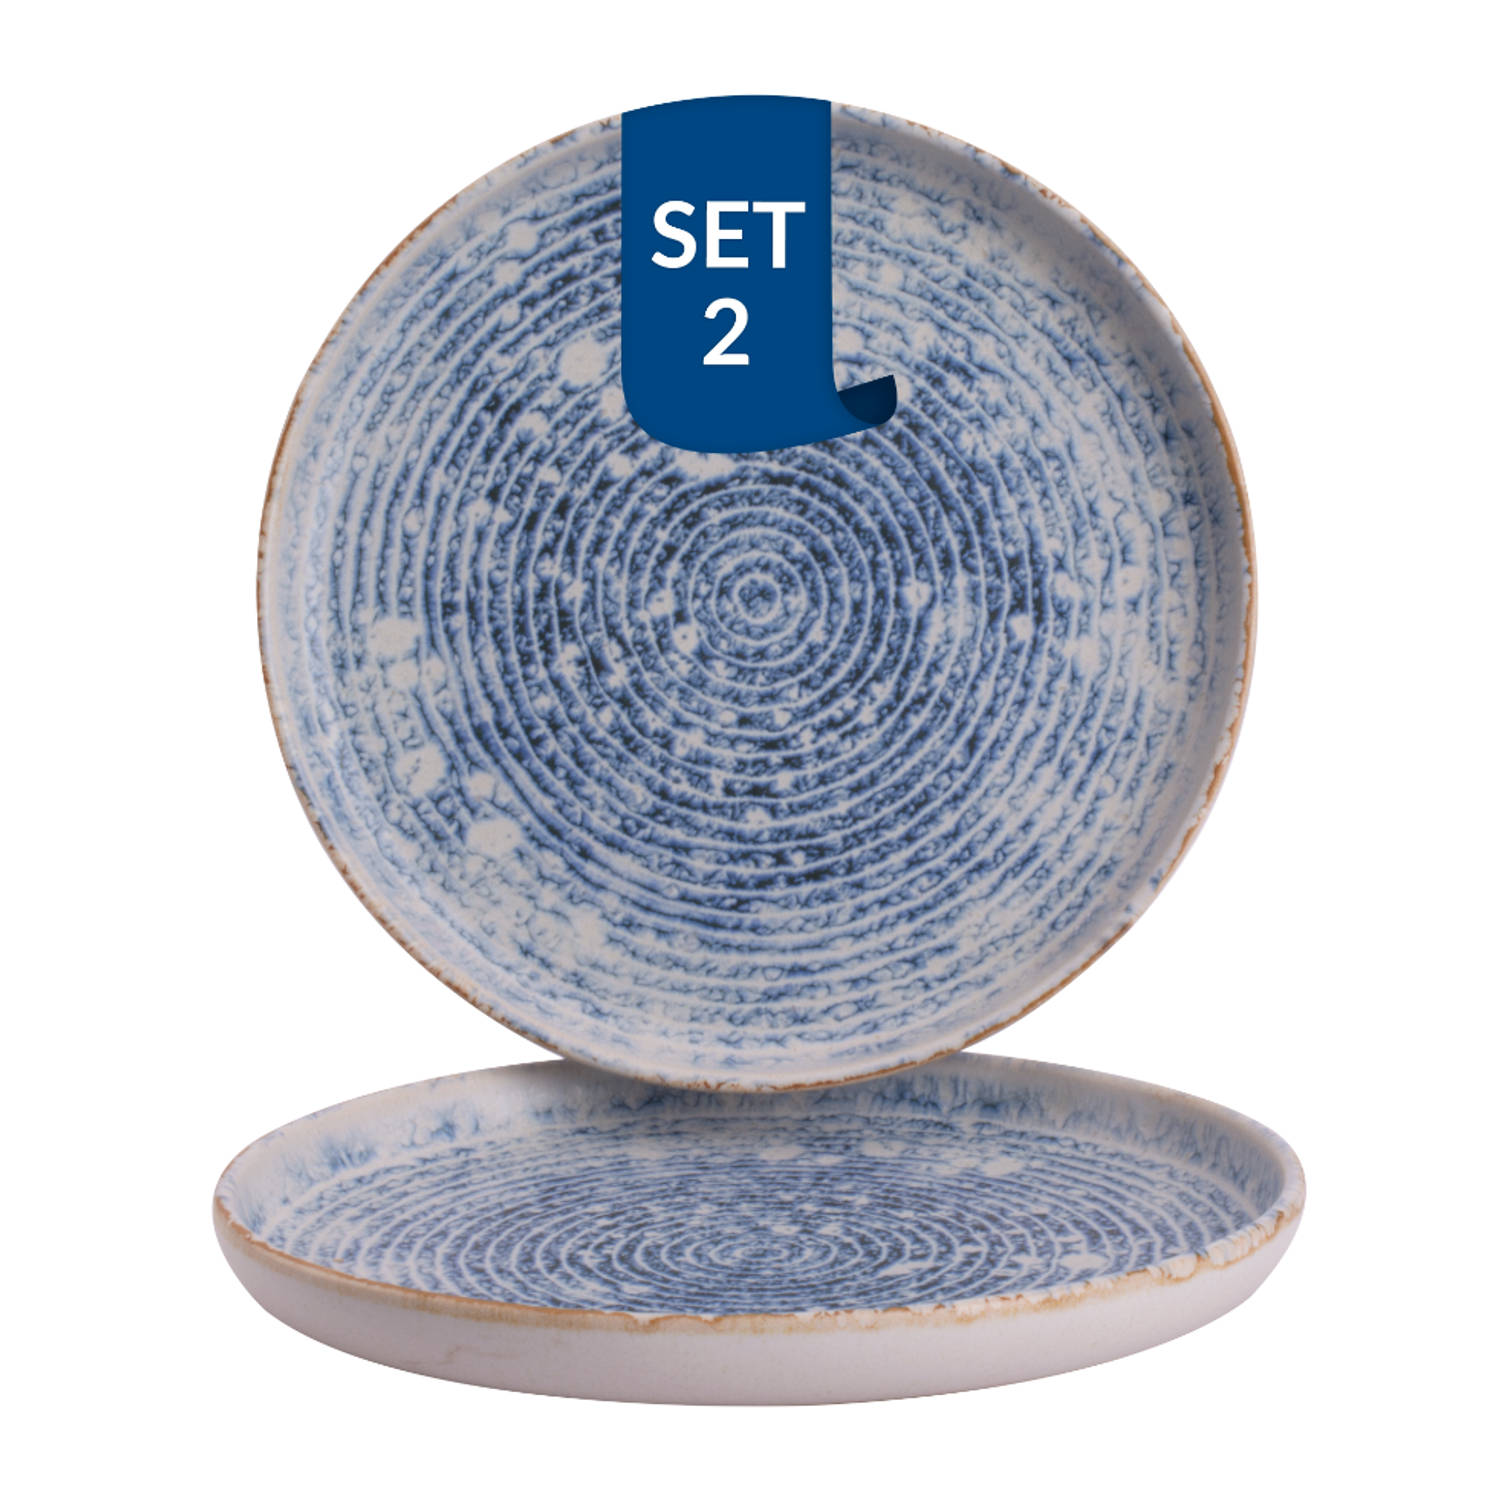 James Cooke Bord Azure Vintage 22 cm Blauw Wit Stoneware 2 stuks